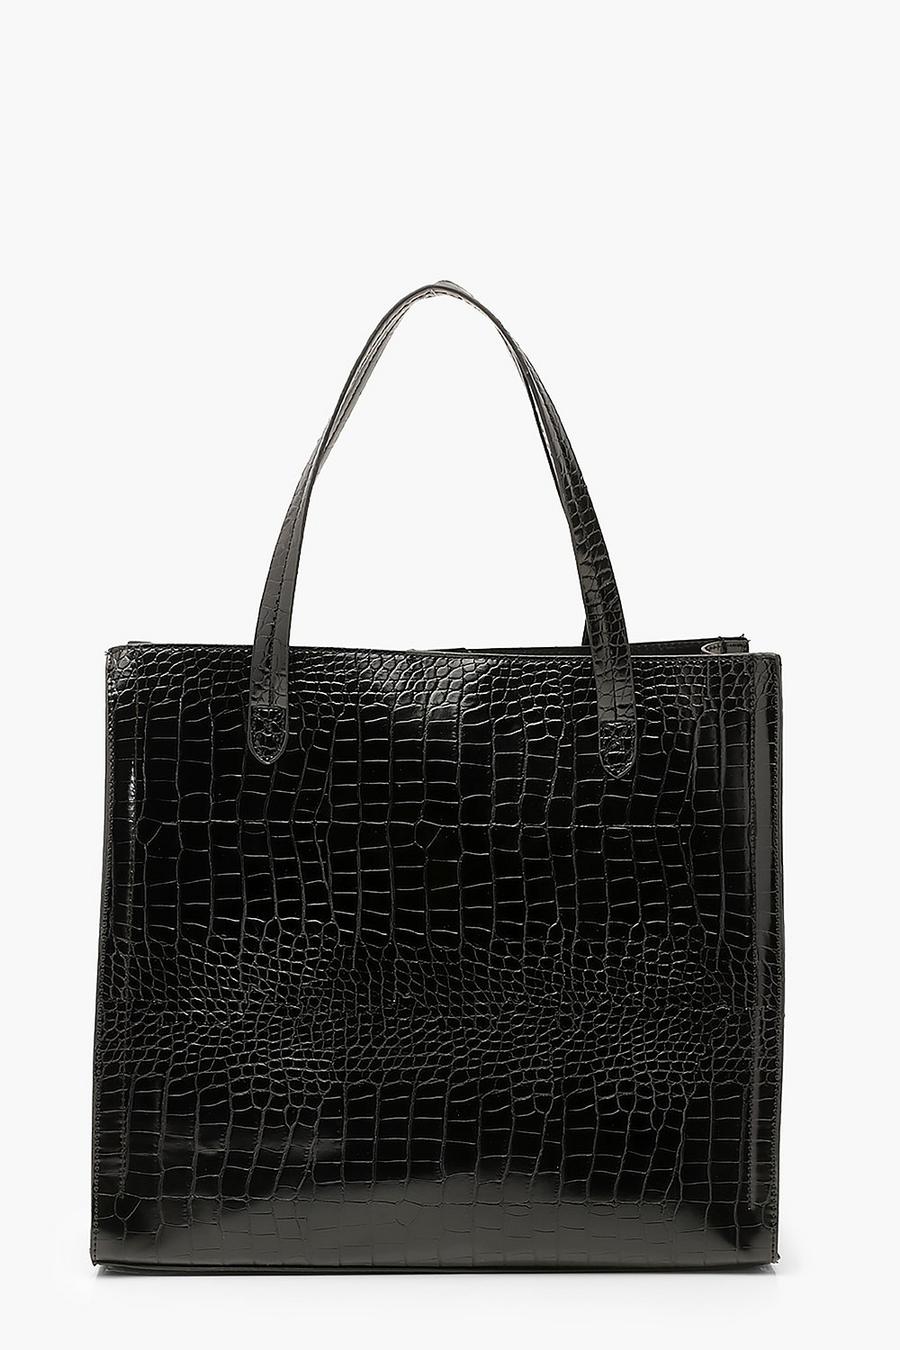 Black Croc PU Tote Shopper Bag image number 1